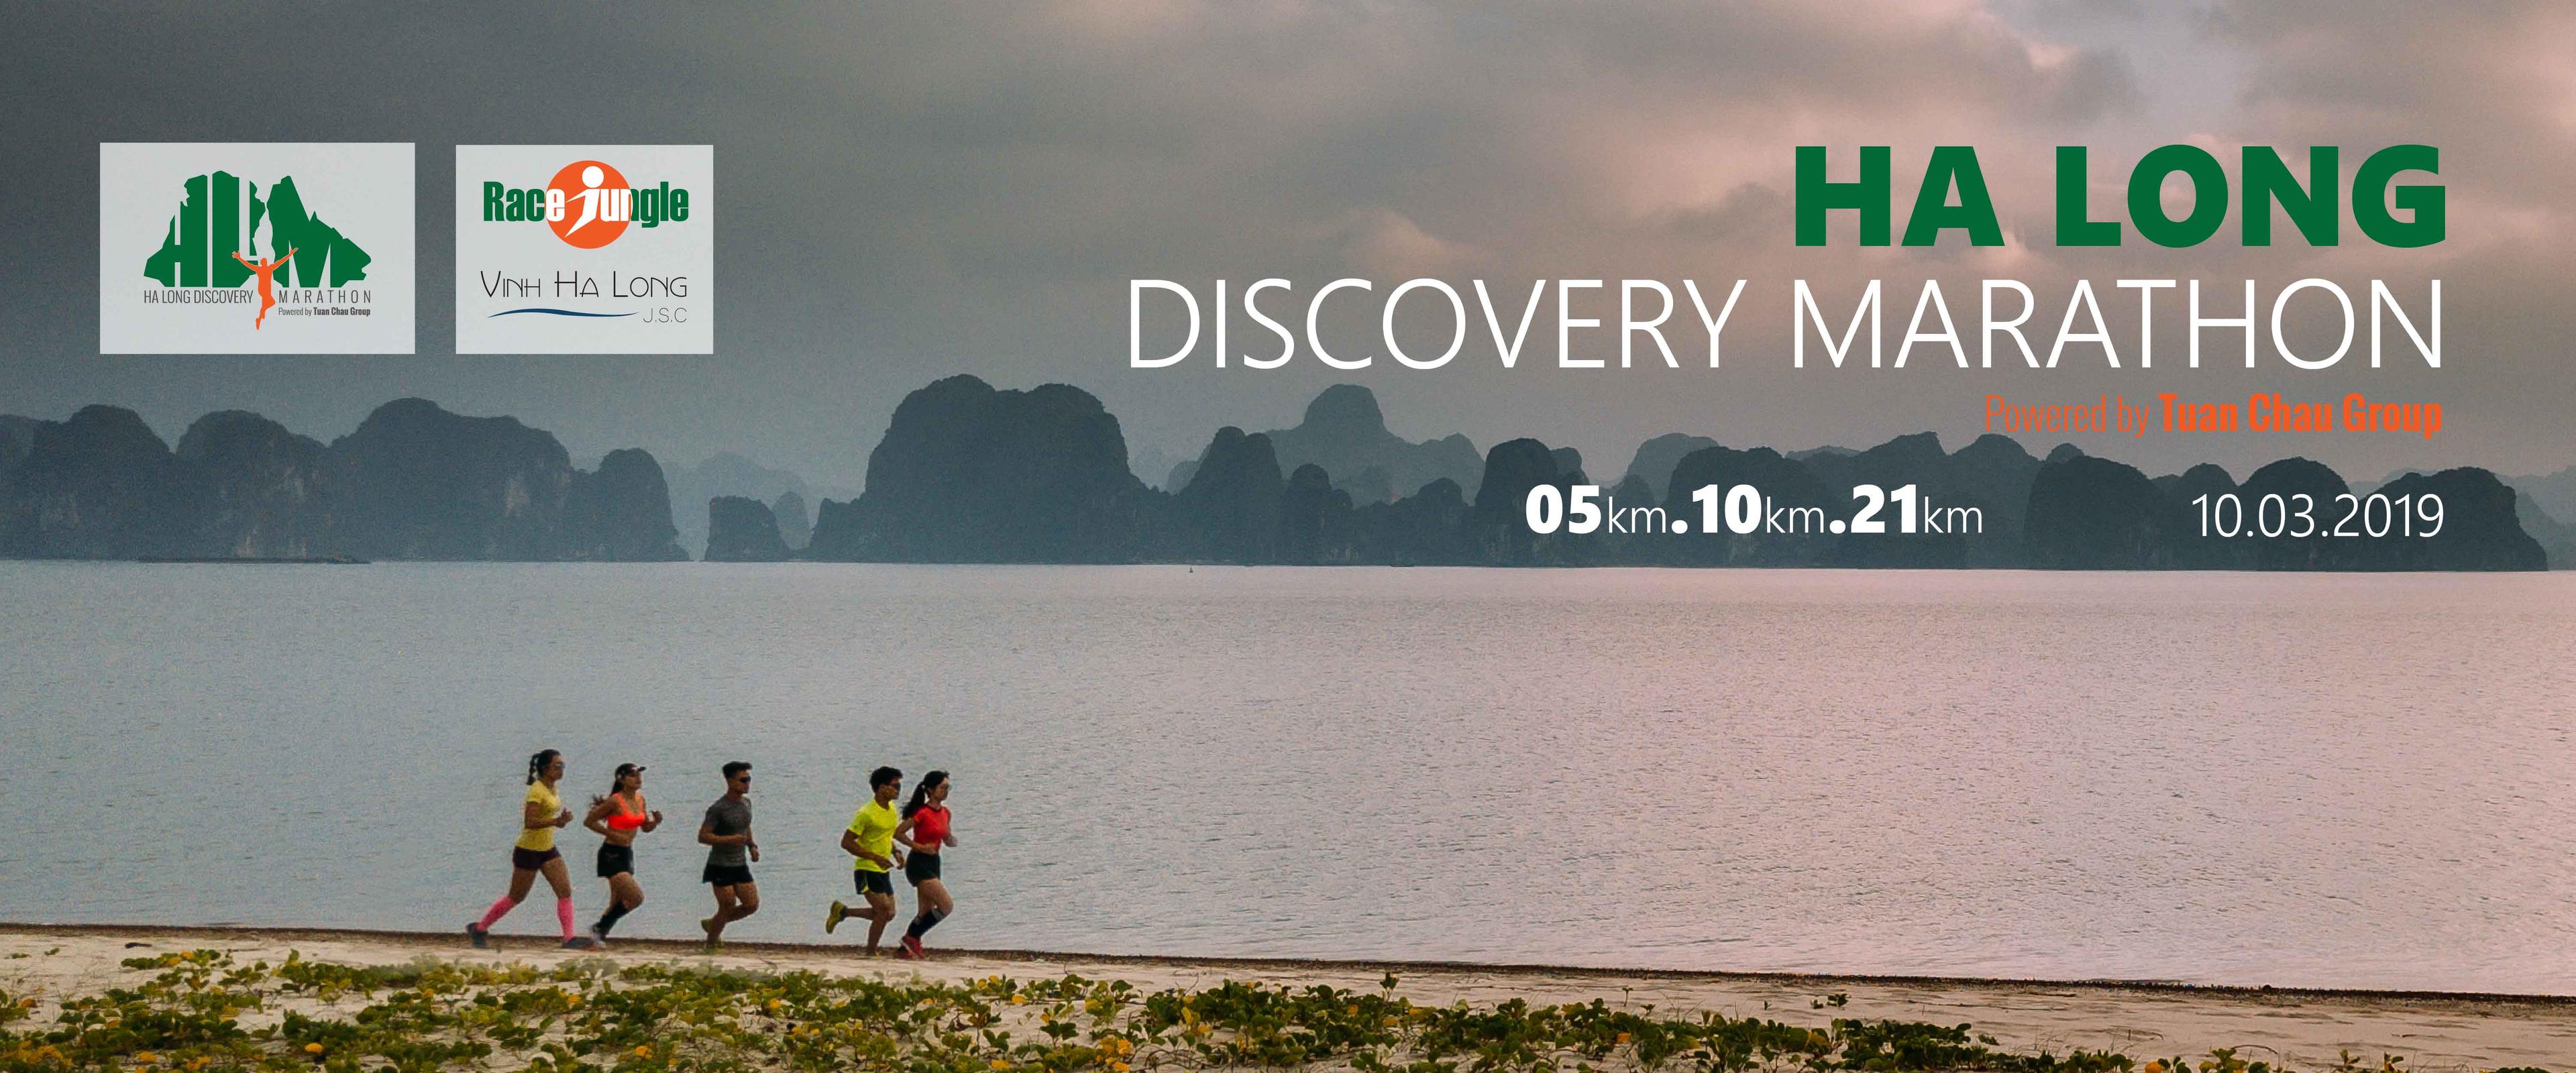 Hạ Long Discovery Marathon powered by Tuan Chau Group